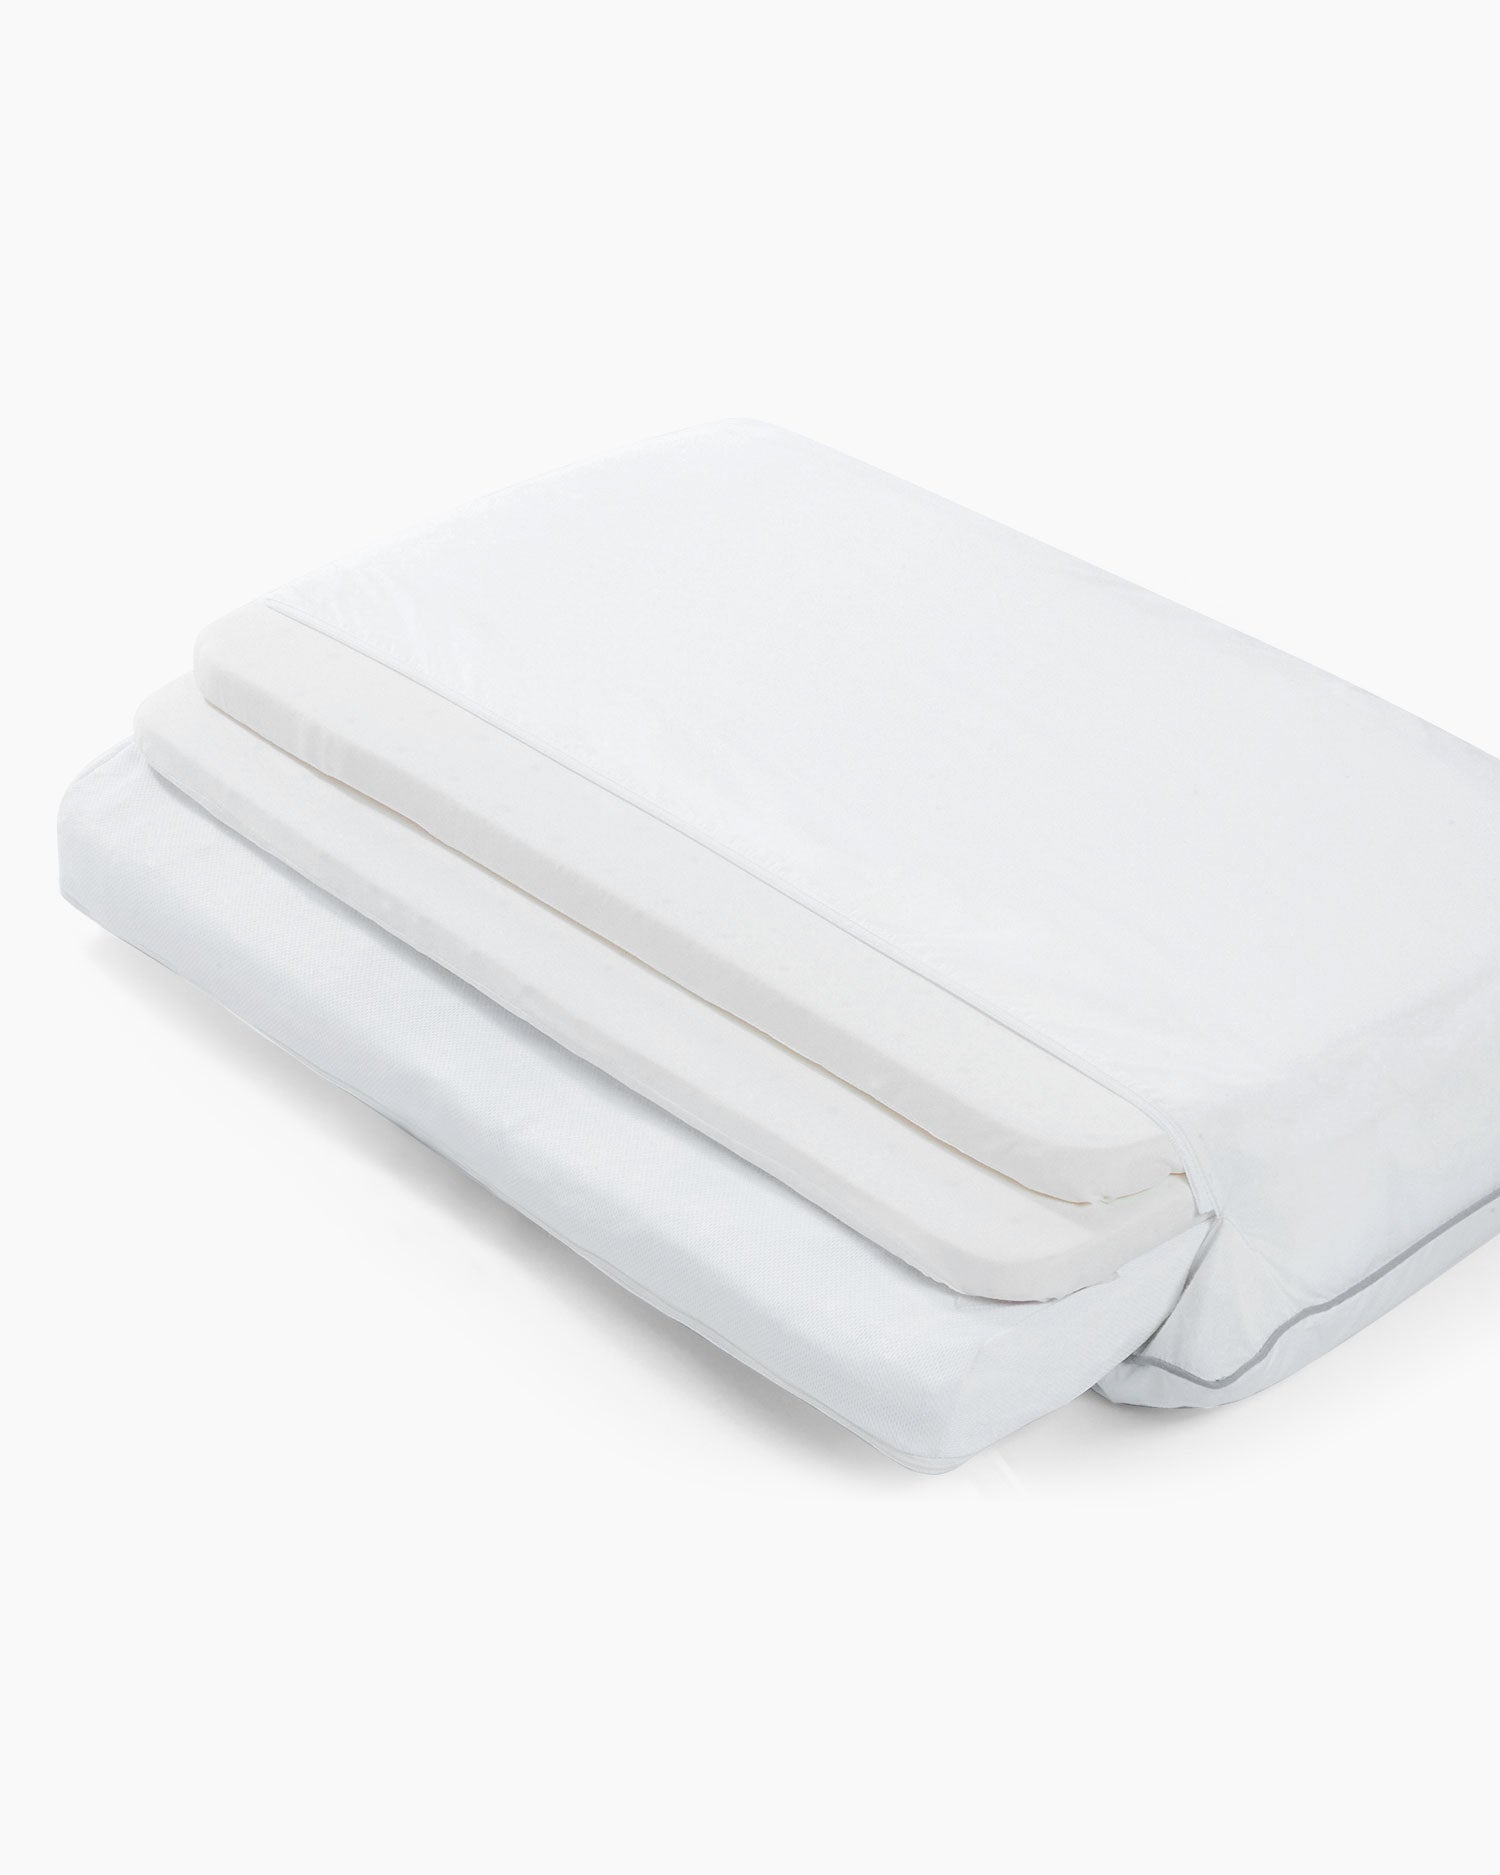 Nitetronic Z1 Anti Snore Pillow Slide Image 2